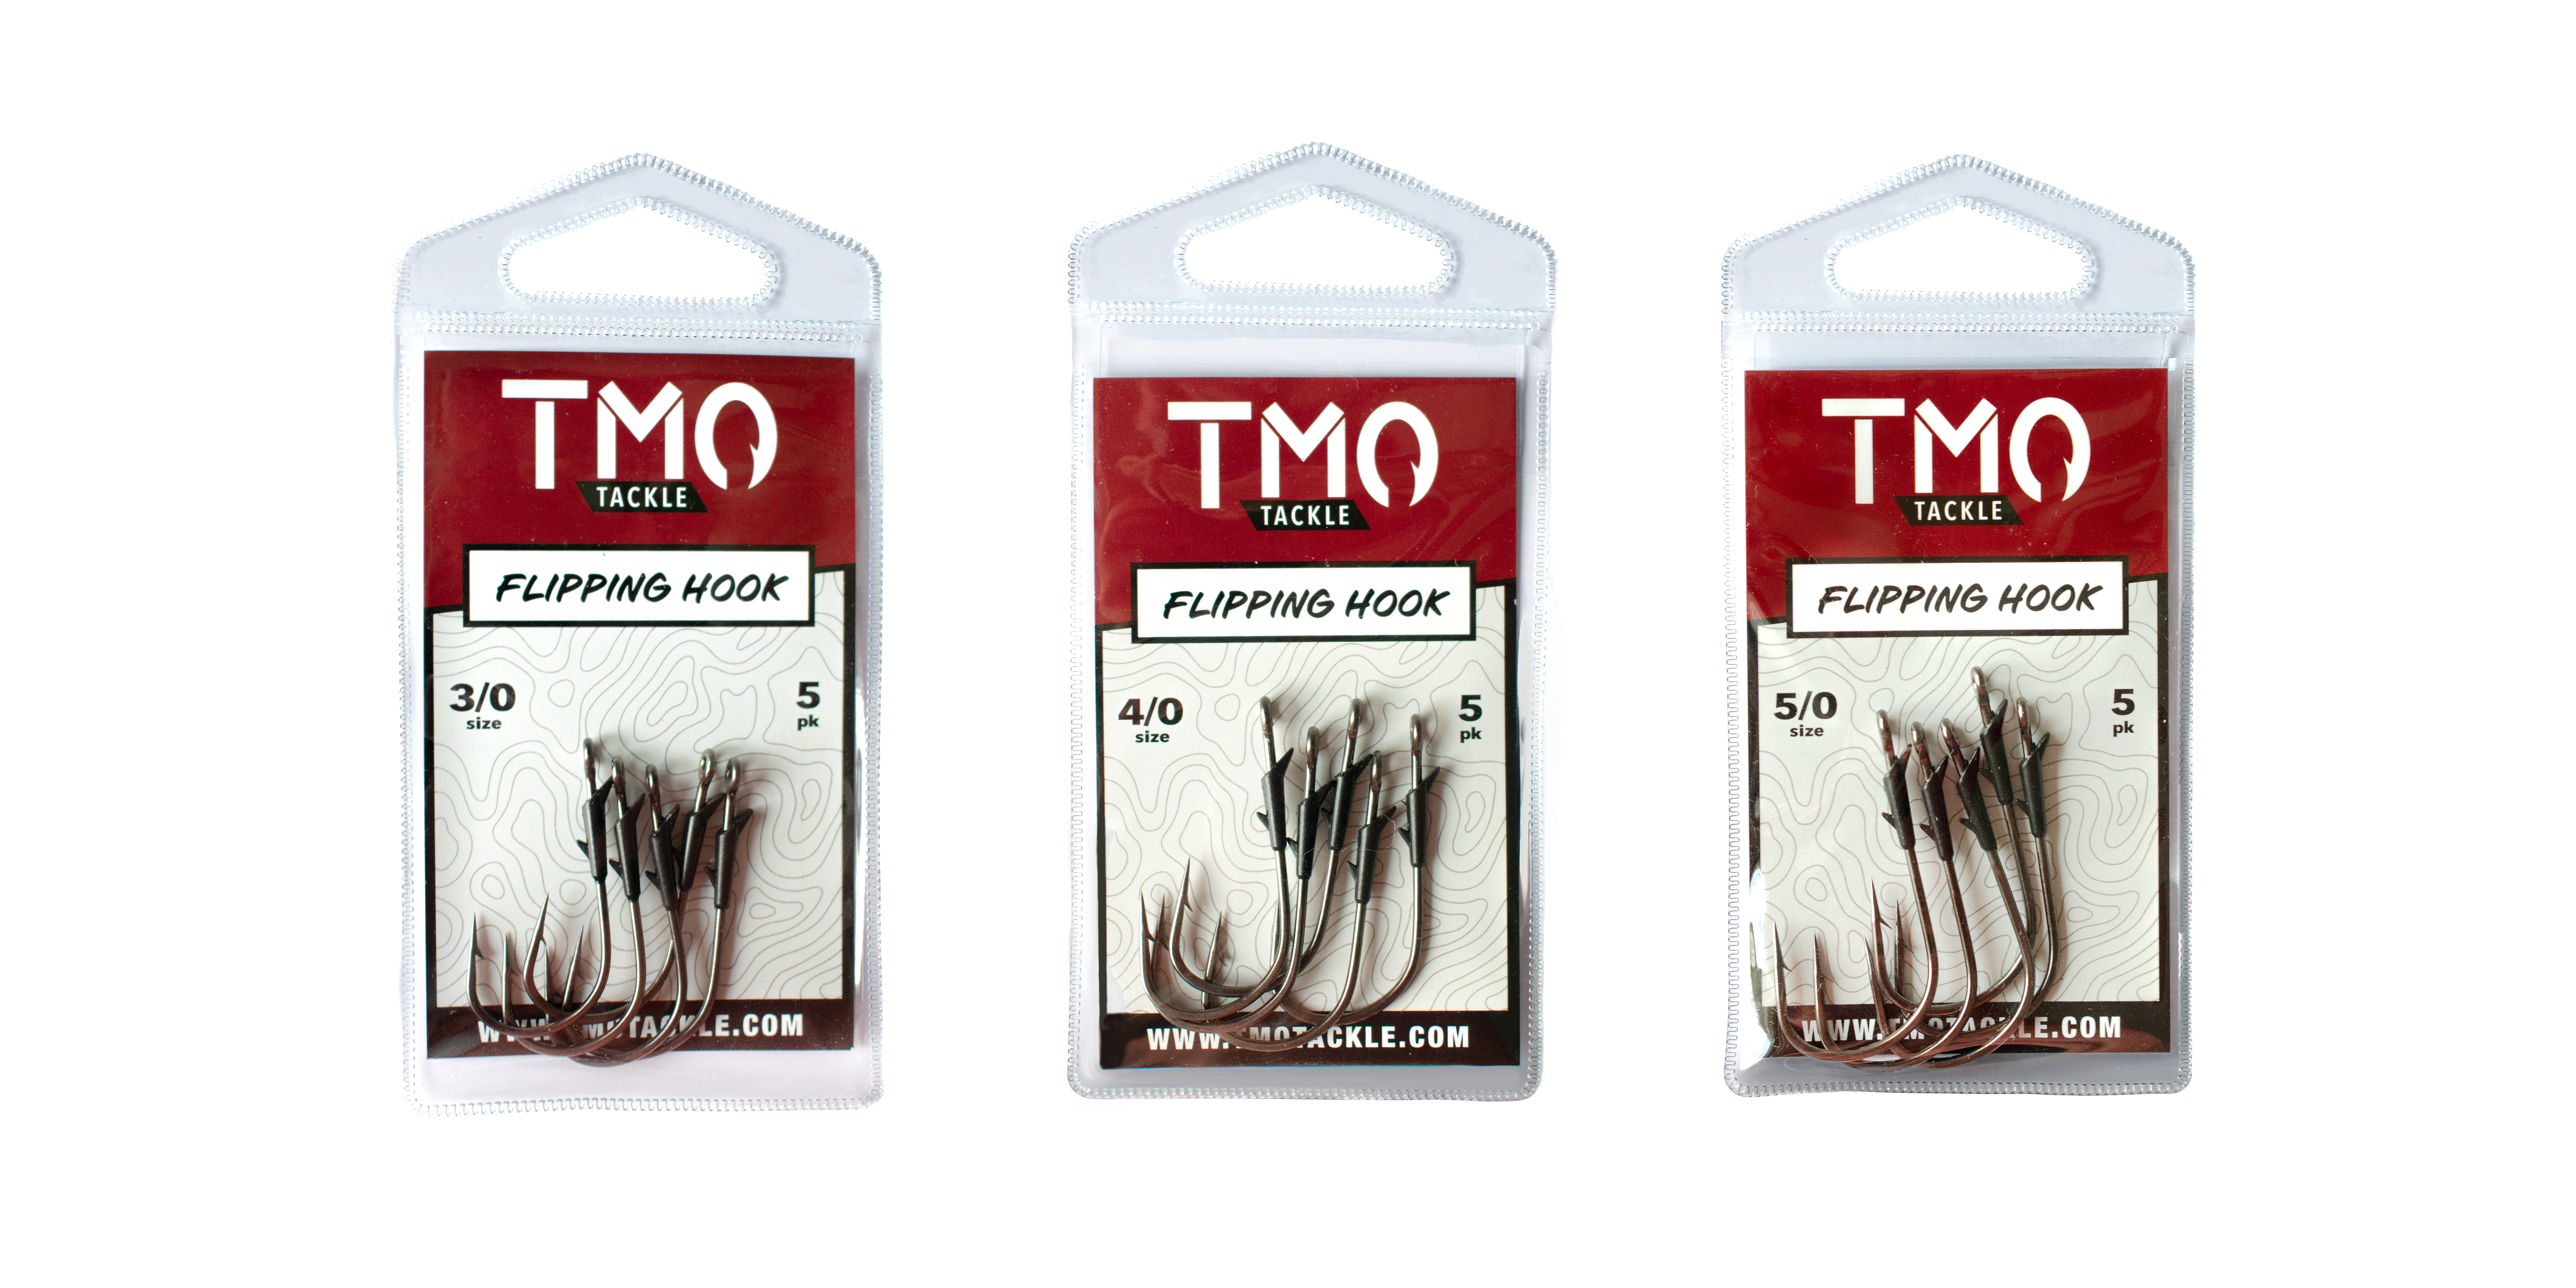 TMO Tackle Flipping Hooks